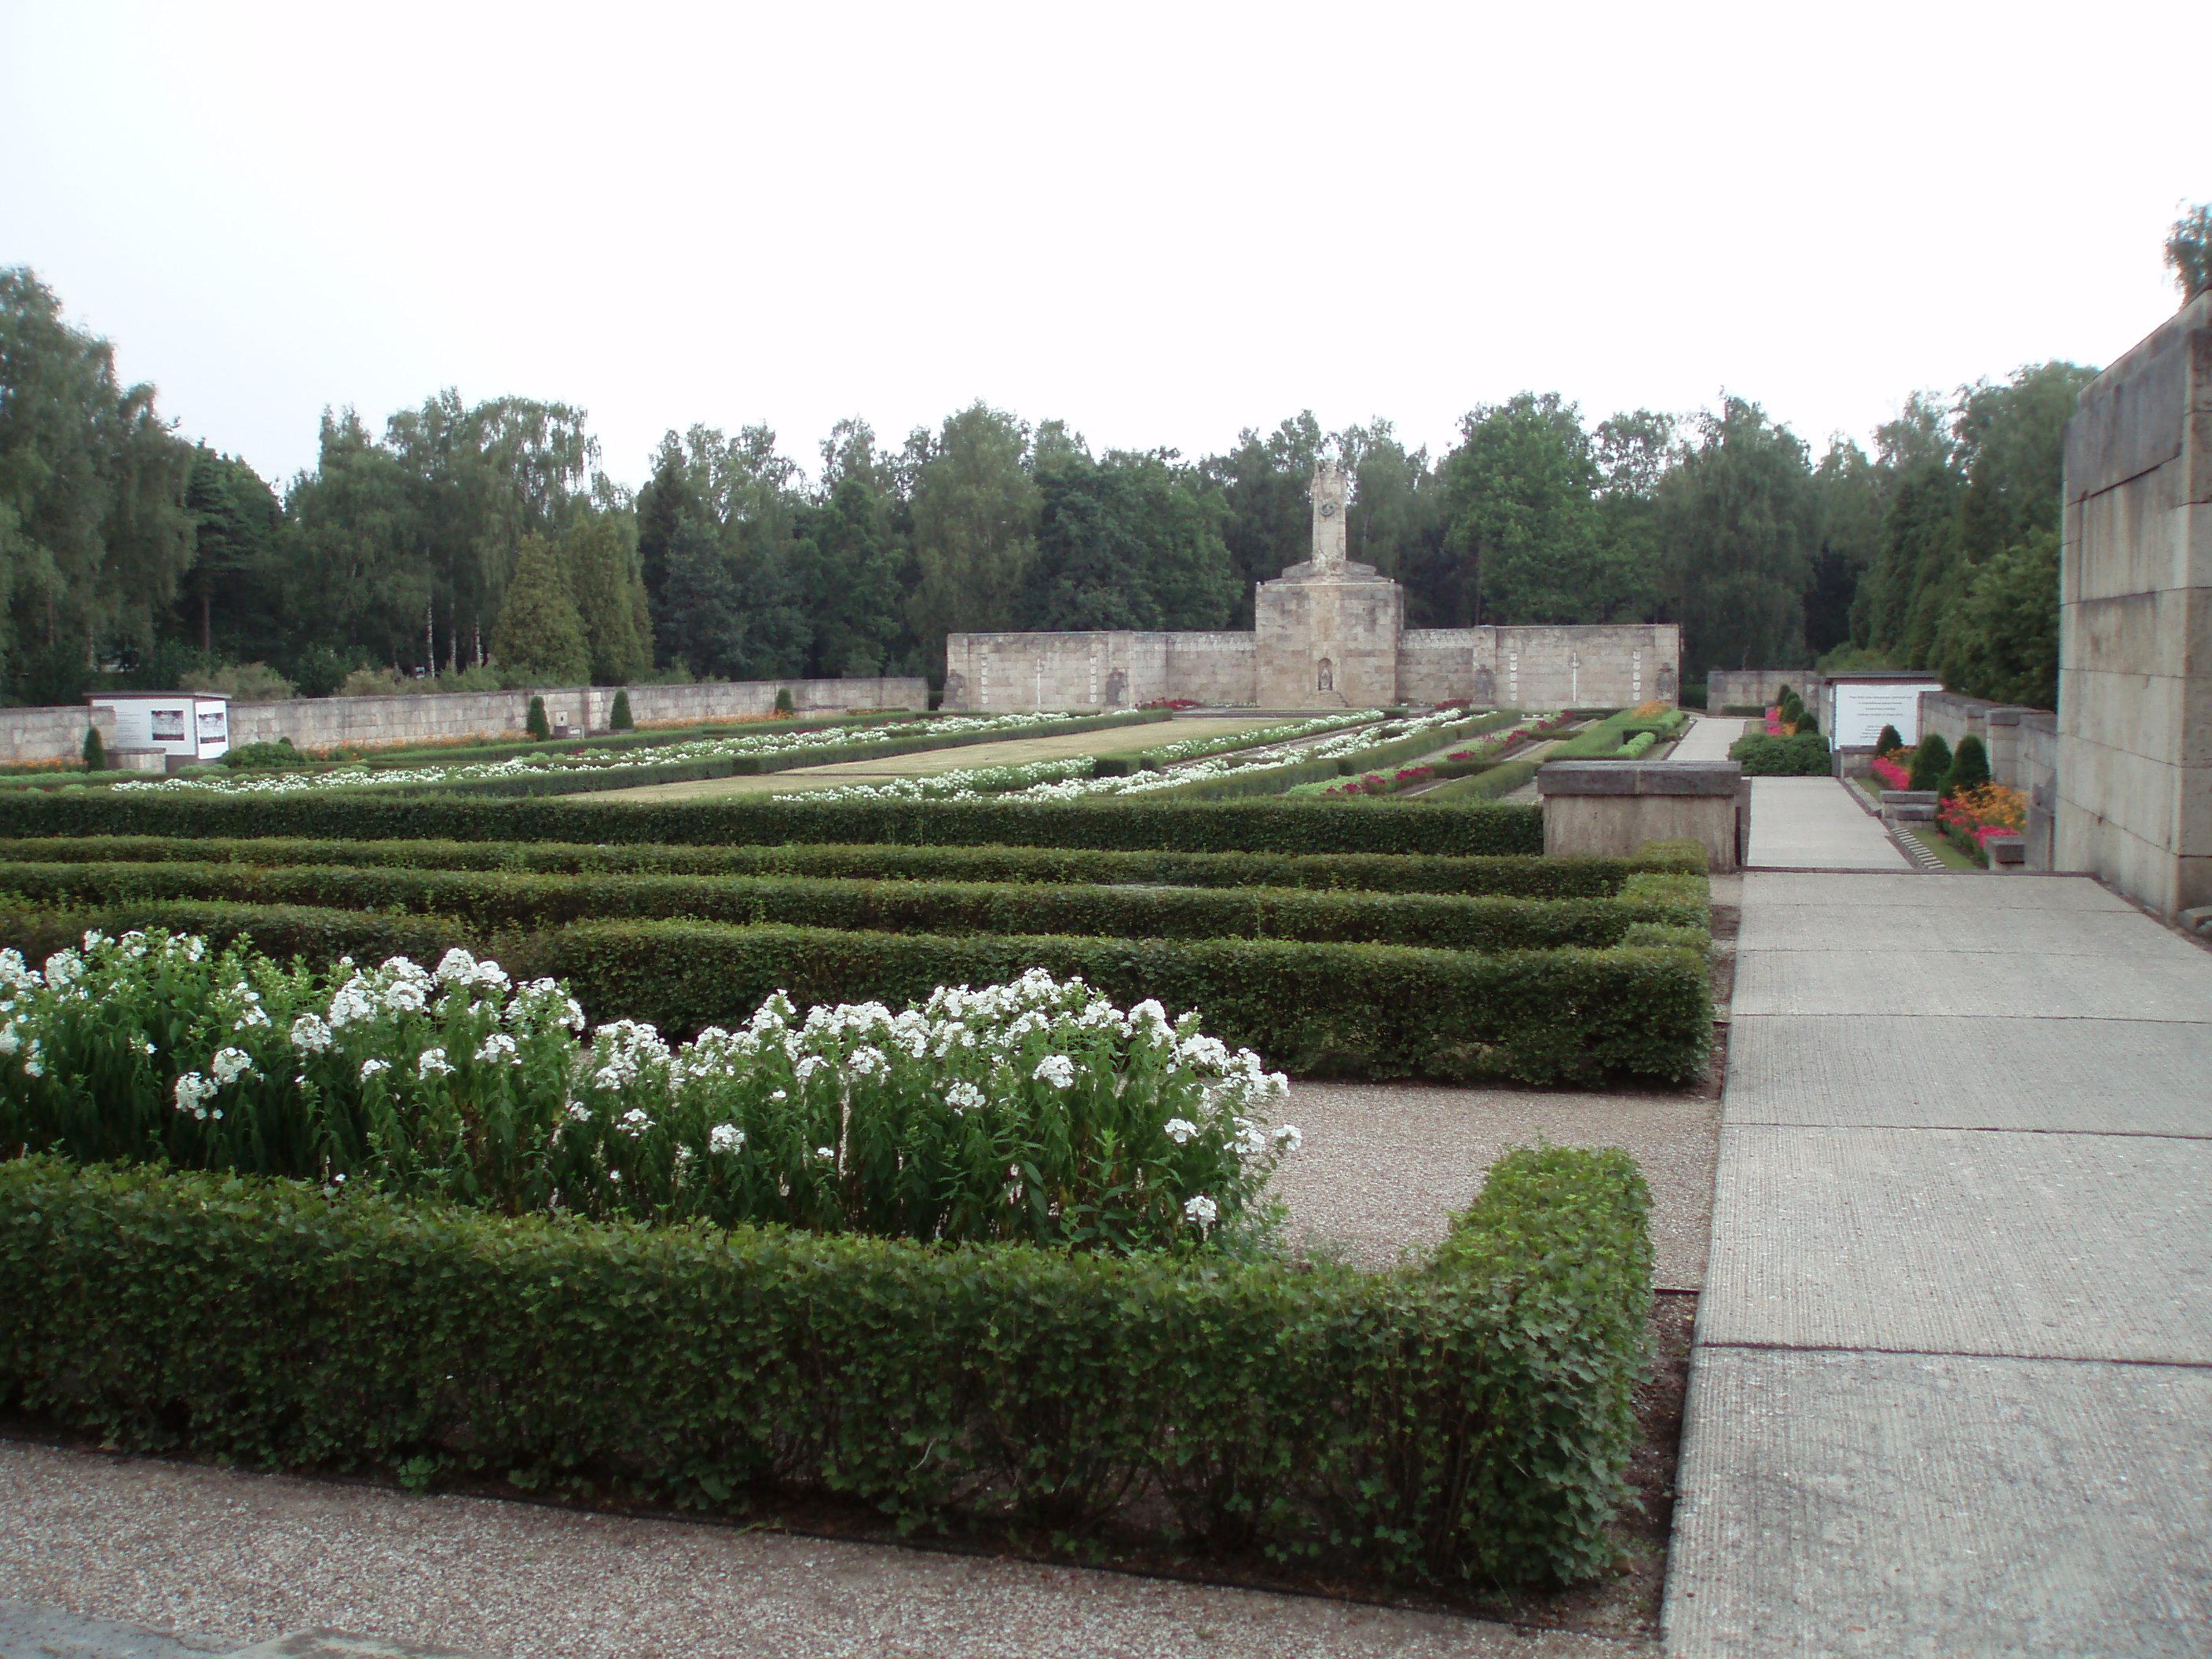 Cover image of this place Riga Brethren Cemetery